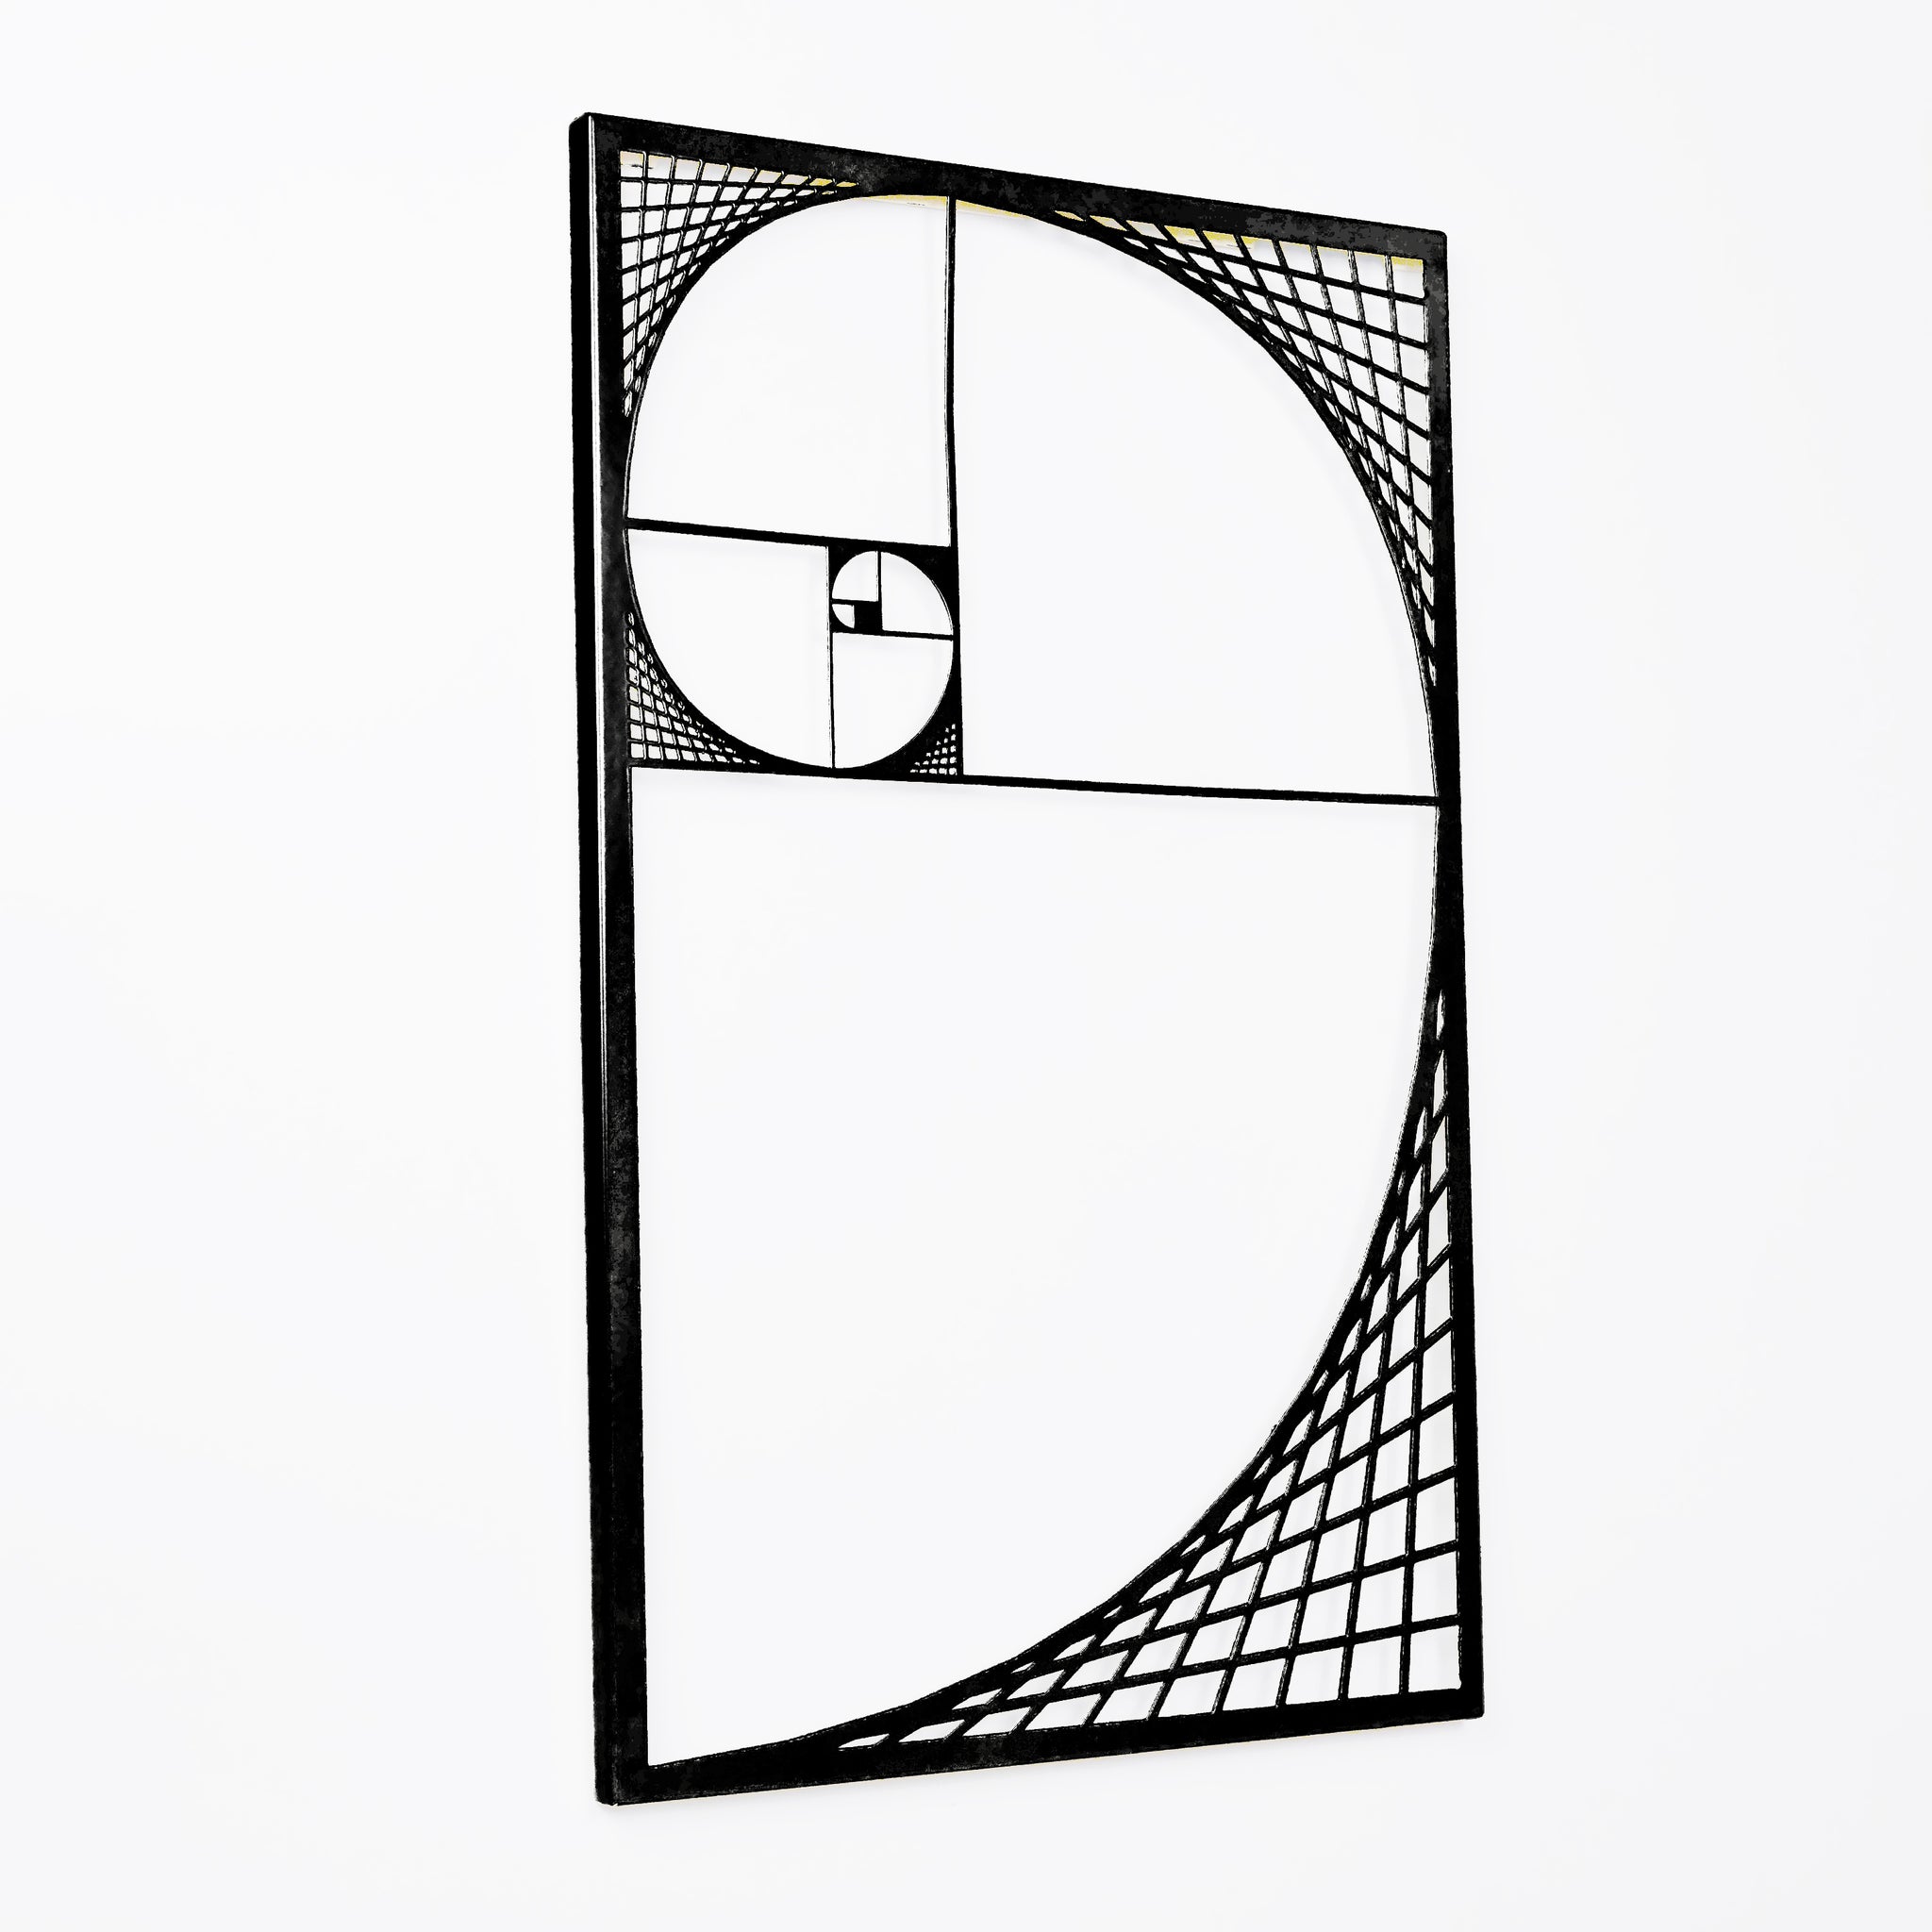 altin-oran-fibonacci-spirali-dekoratif-metal-duvar-tablosu-metal-dekor